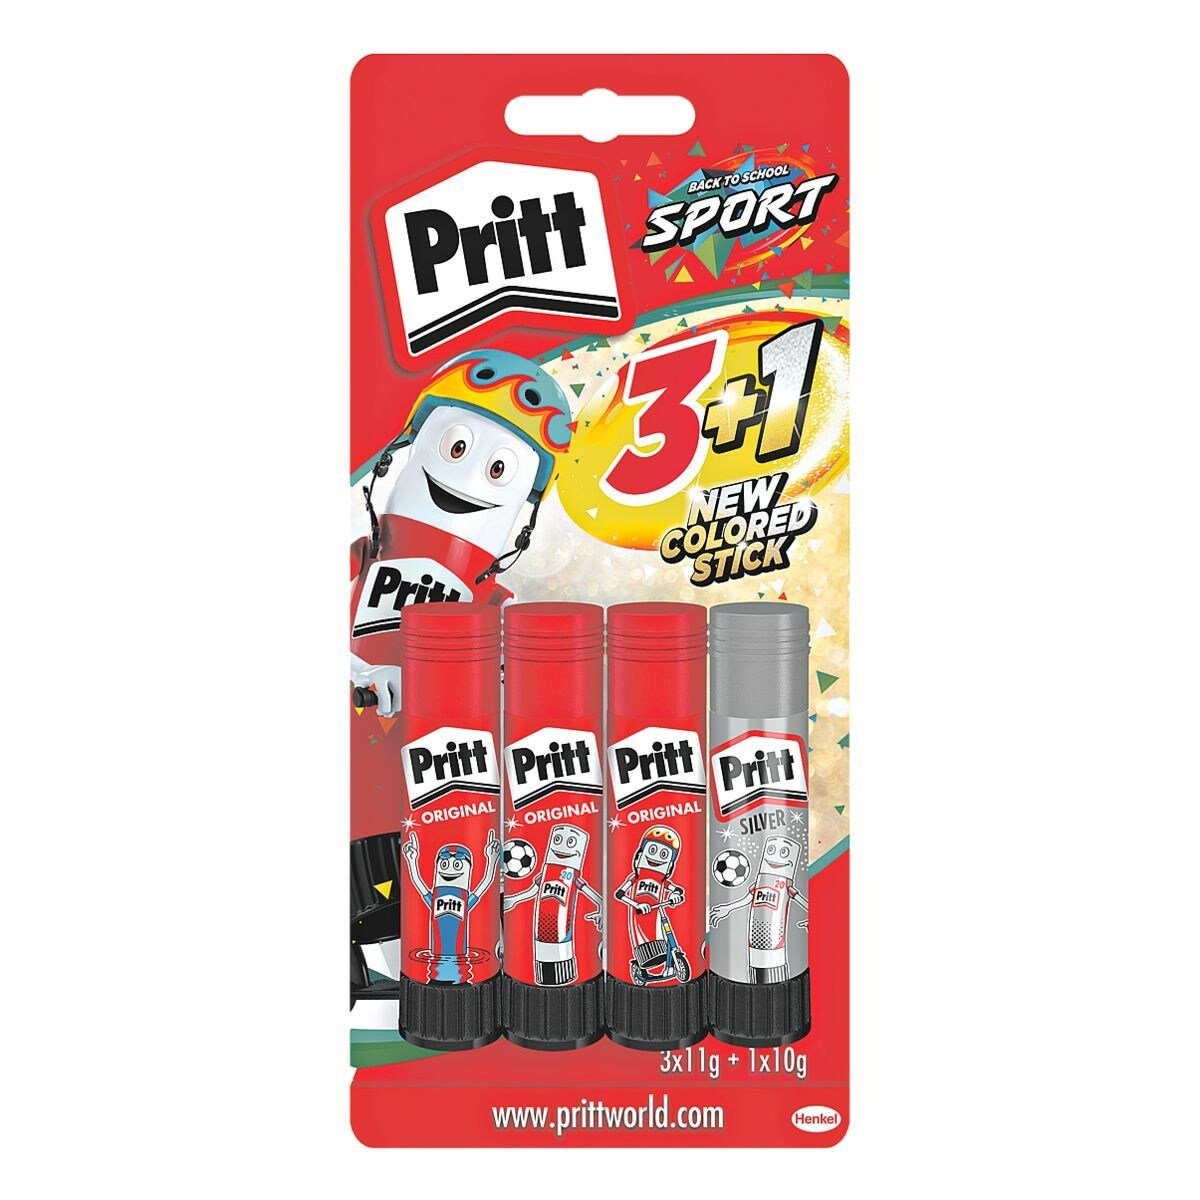 Sport, g, PRITT 4er & 10 g mit Klebestift (4-tlg), 11 3x 1x Verschlusskappe Set,